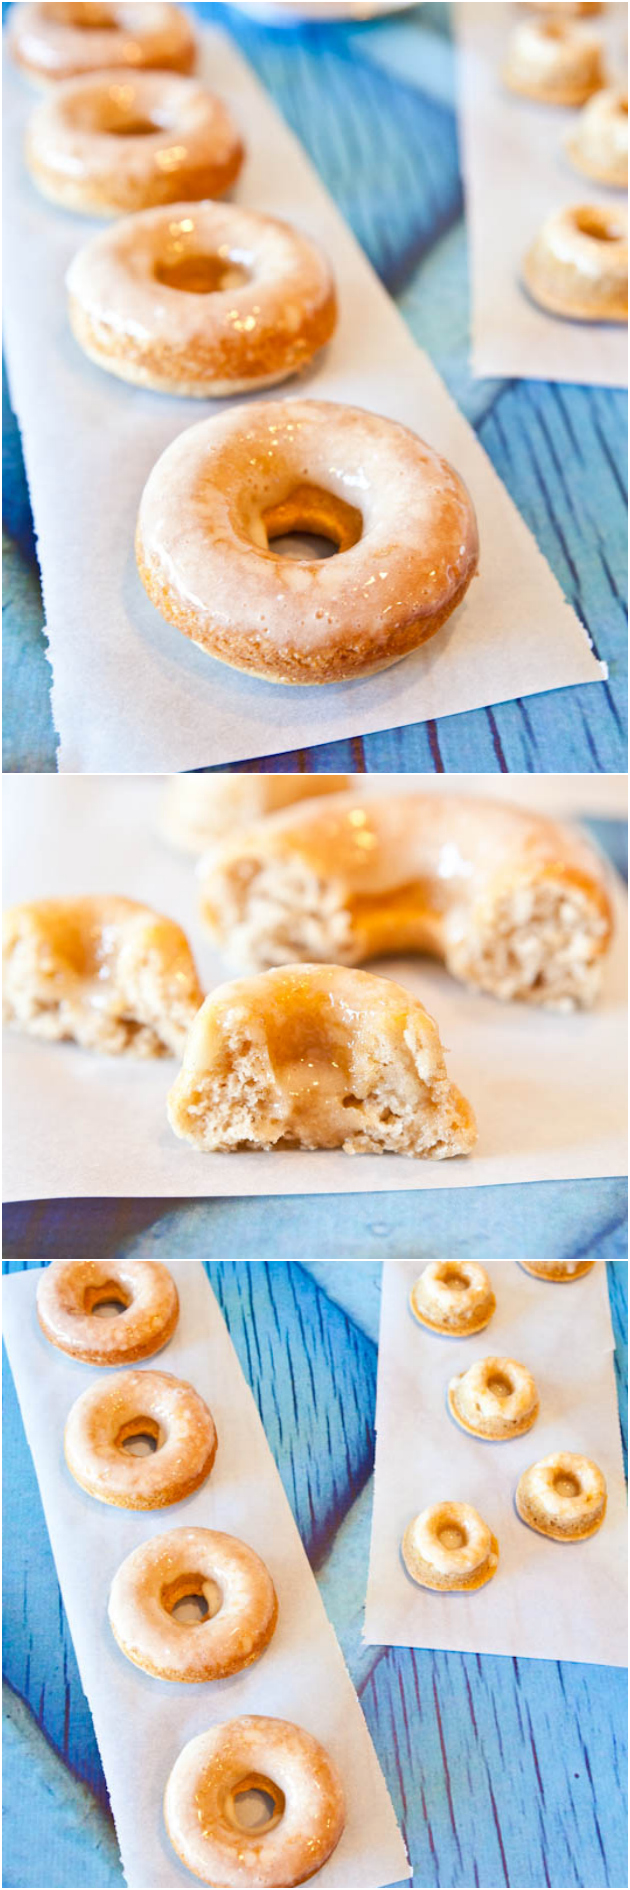 Baked Eggnog Vanilla Donuts with Eggnog Rum Glaze - Averie Cooks